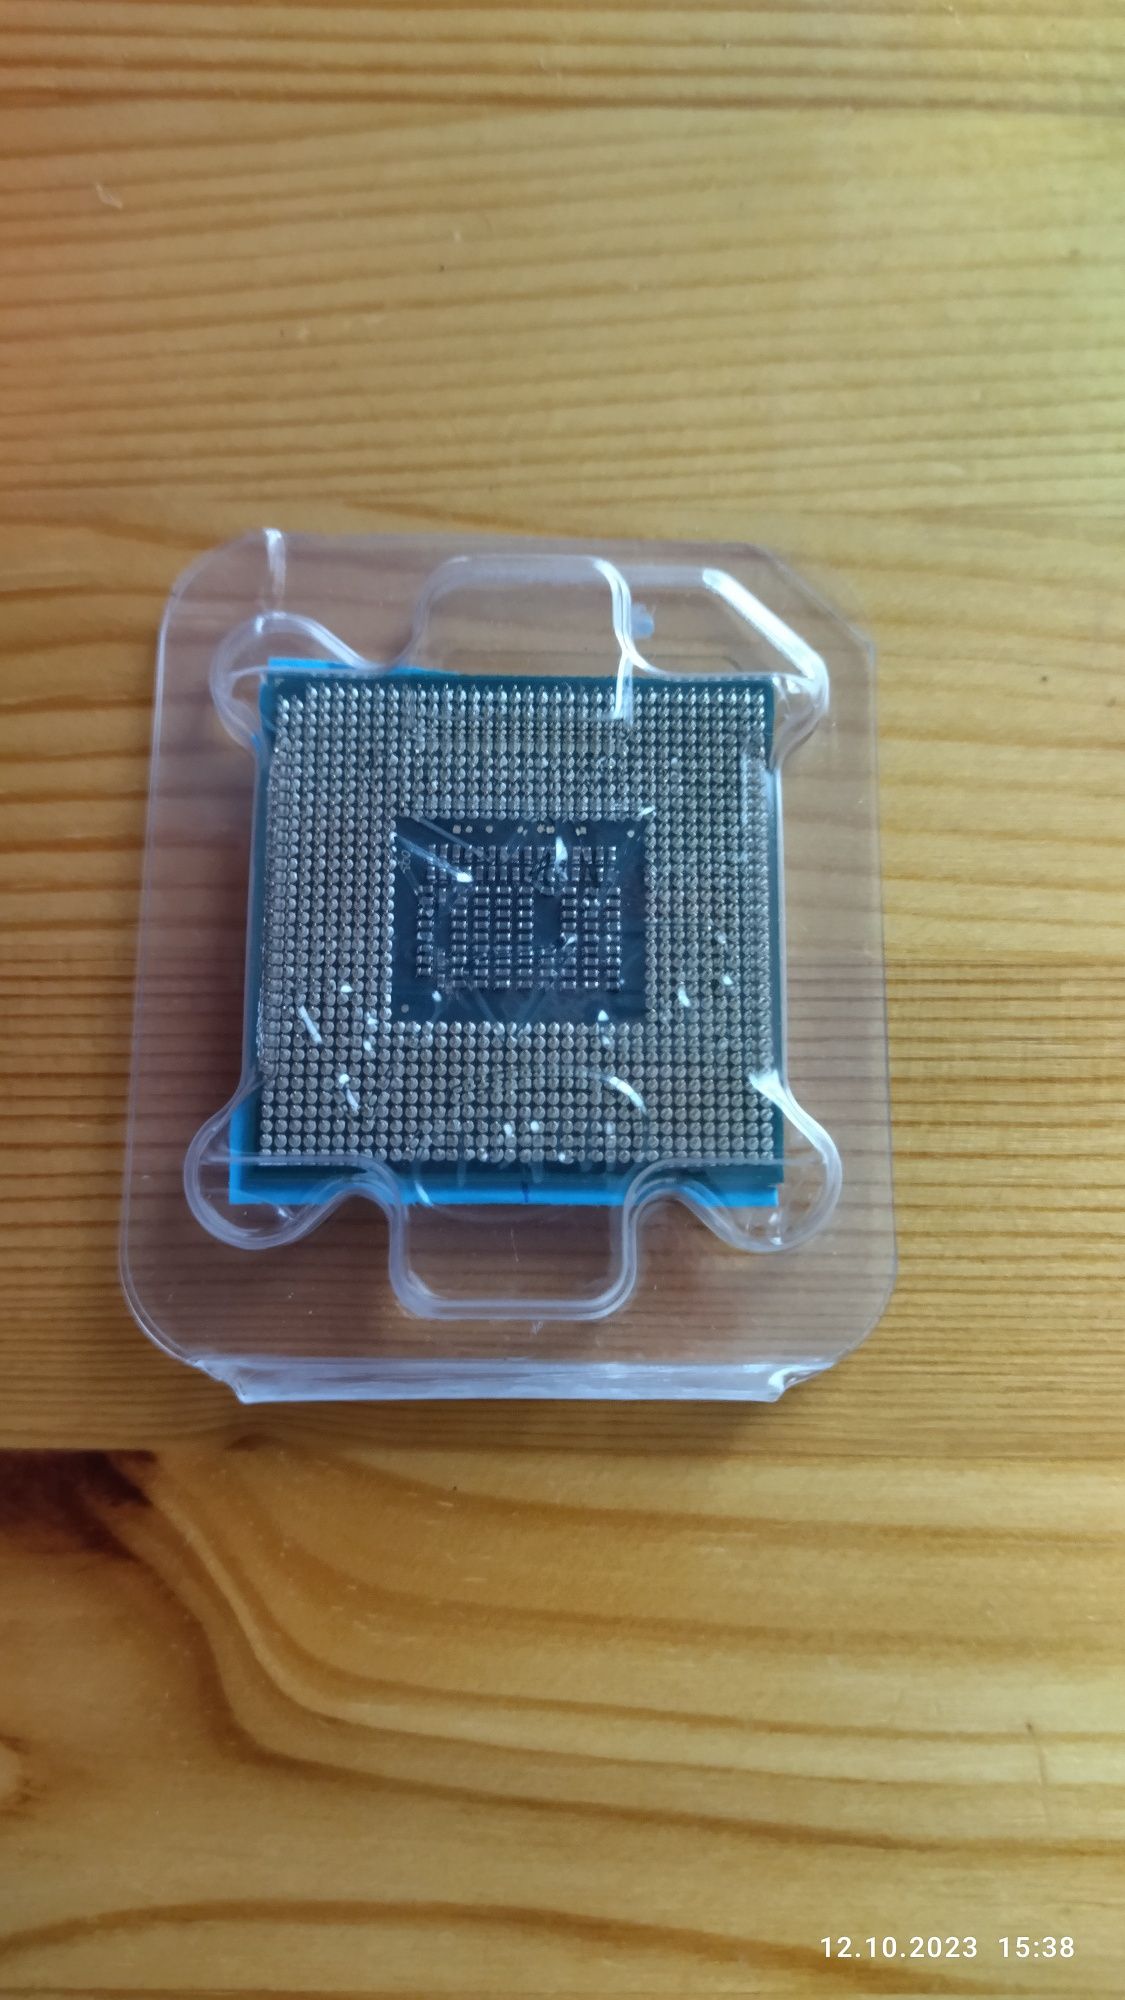 Procesor Intel i5 3320m laptop tdp 35w